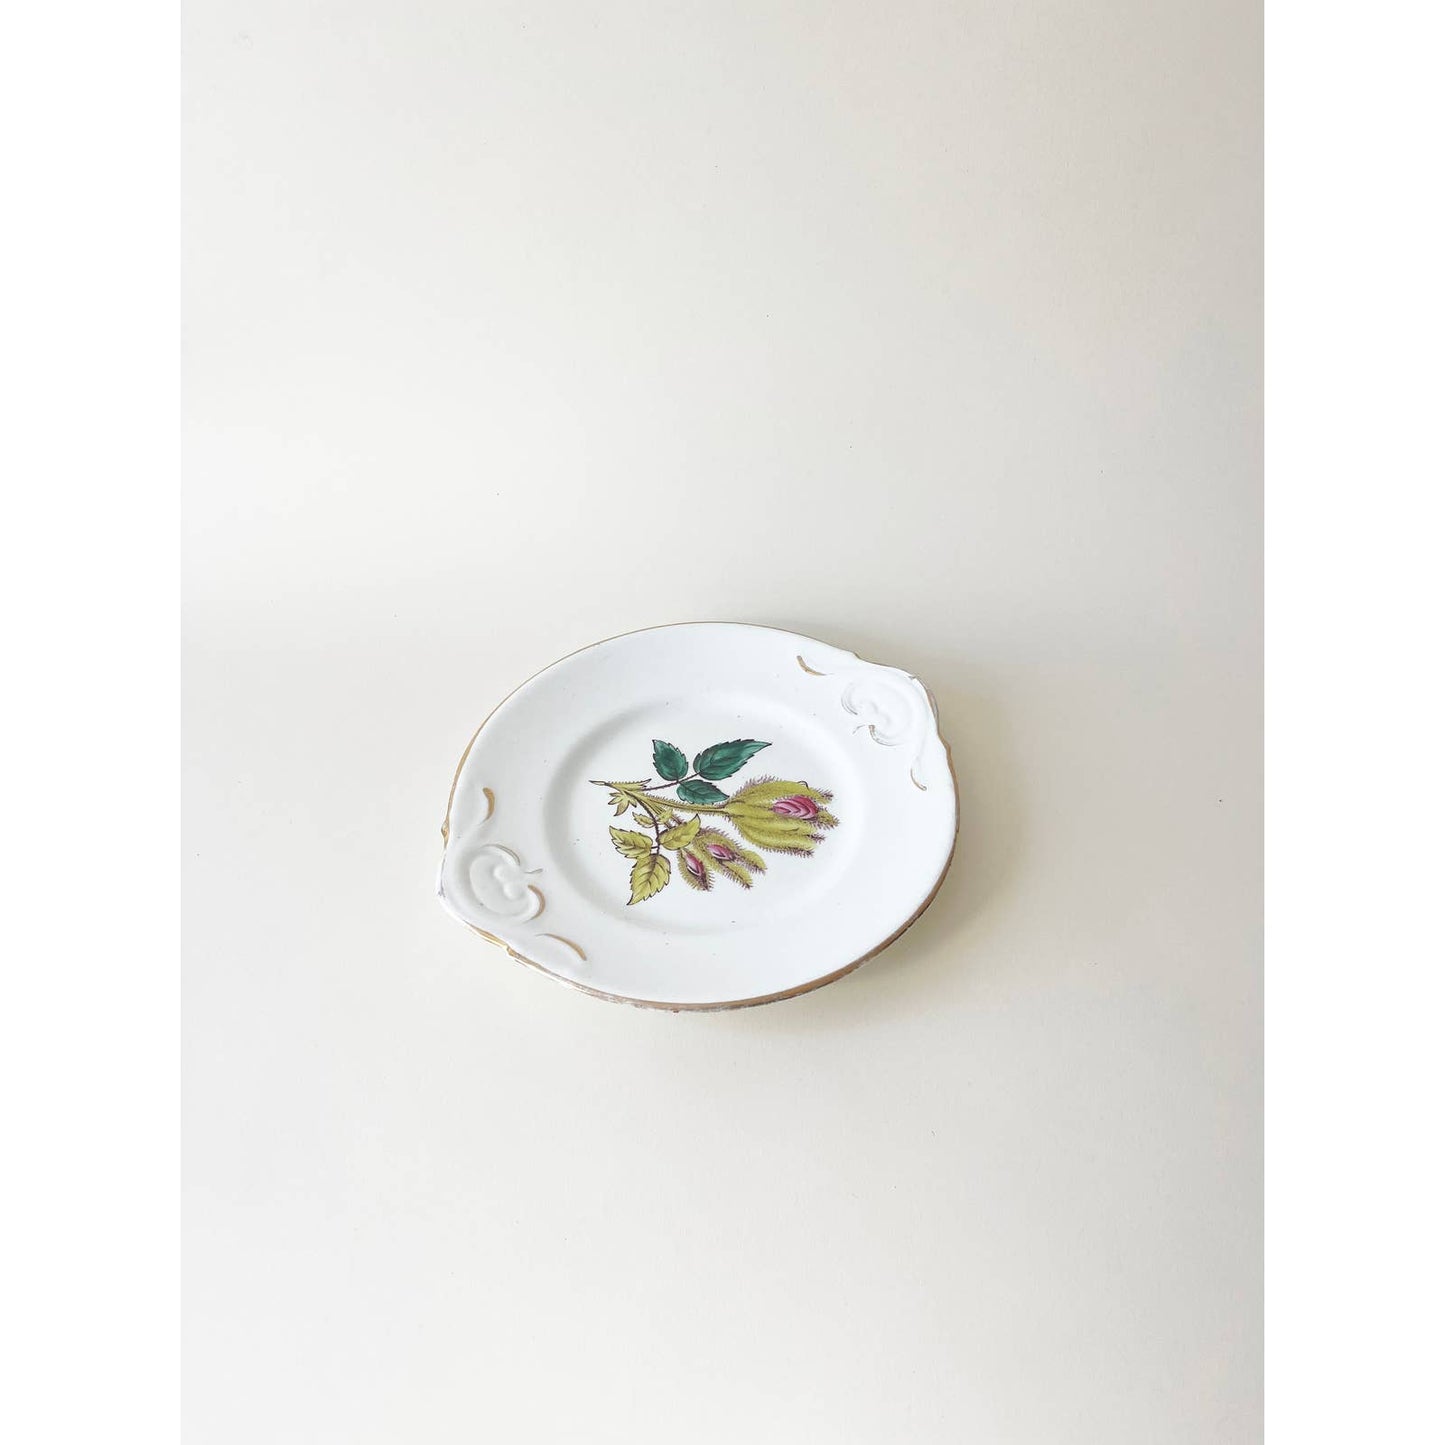 Antique Classic Flower Decorative Plate